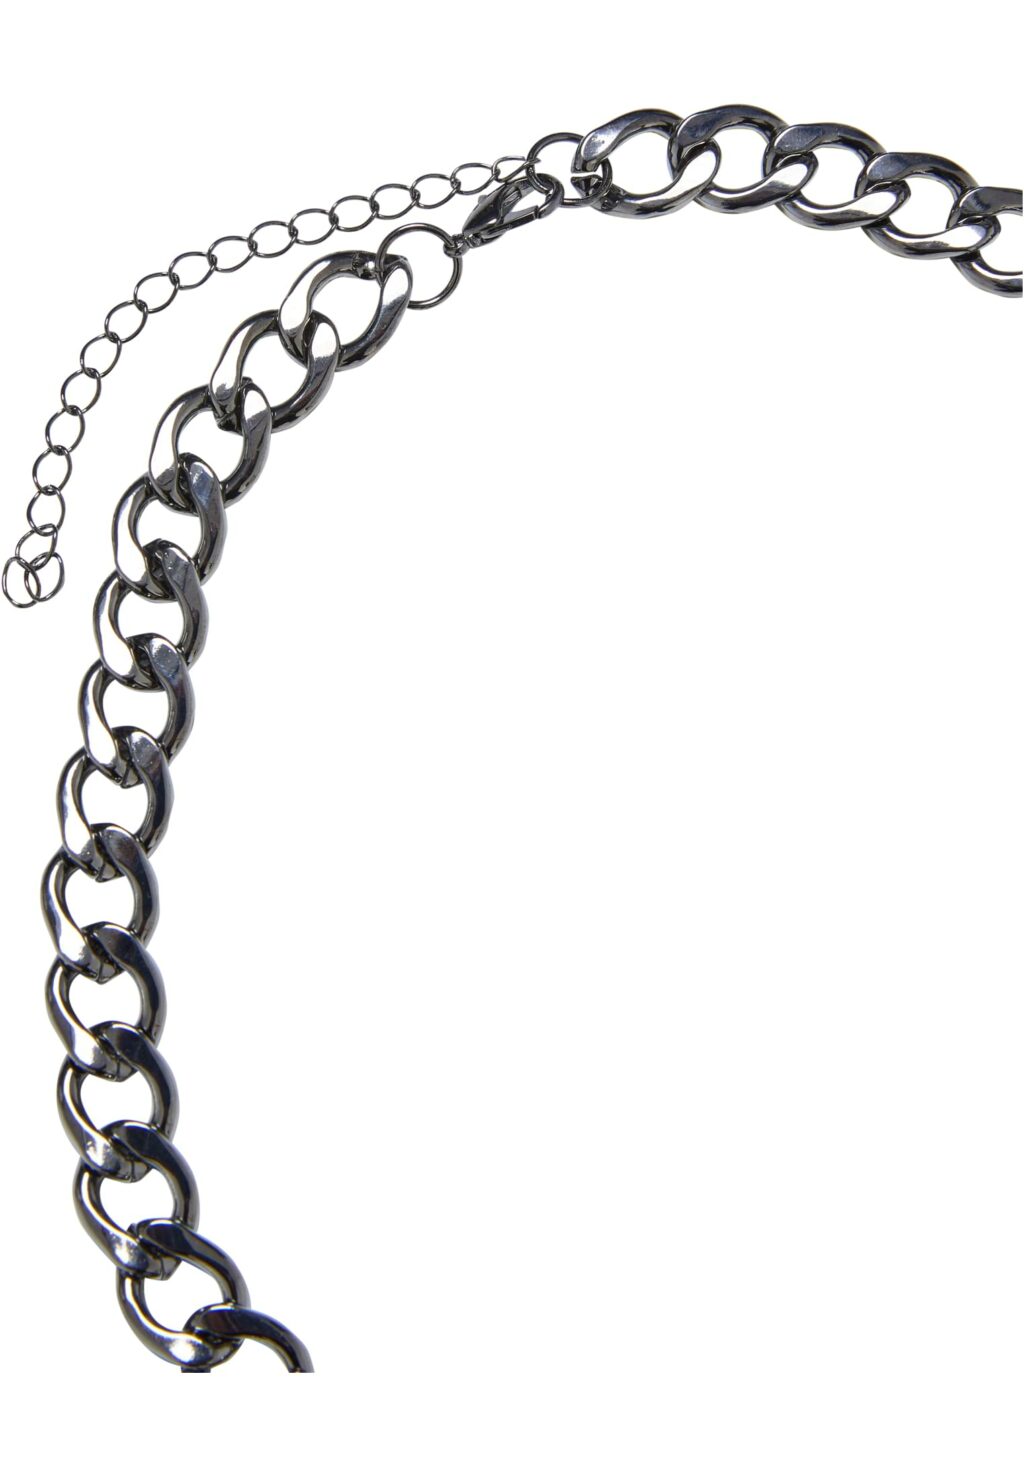 Big Chain Necklace gunmetal one TB3891